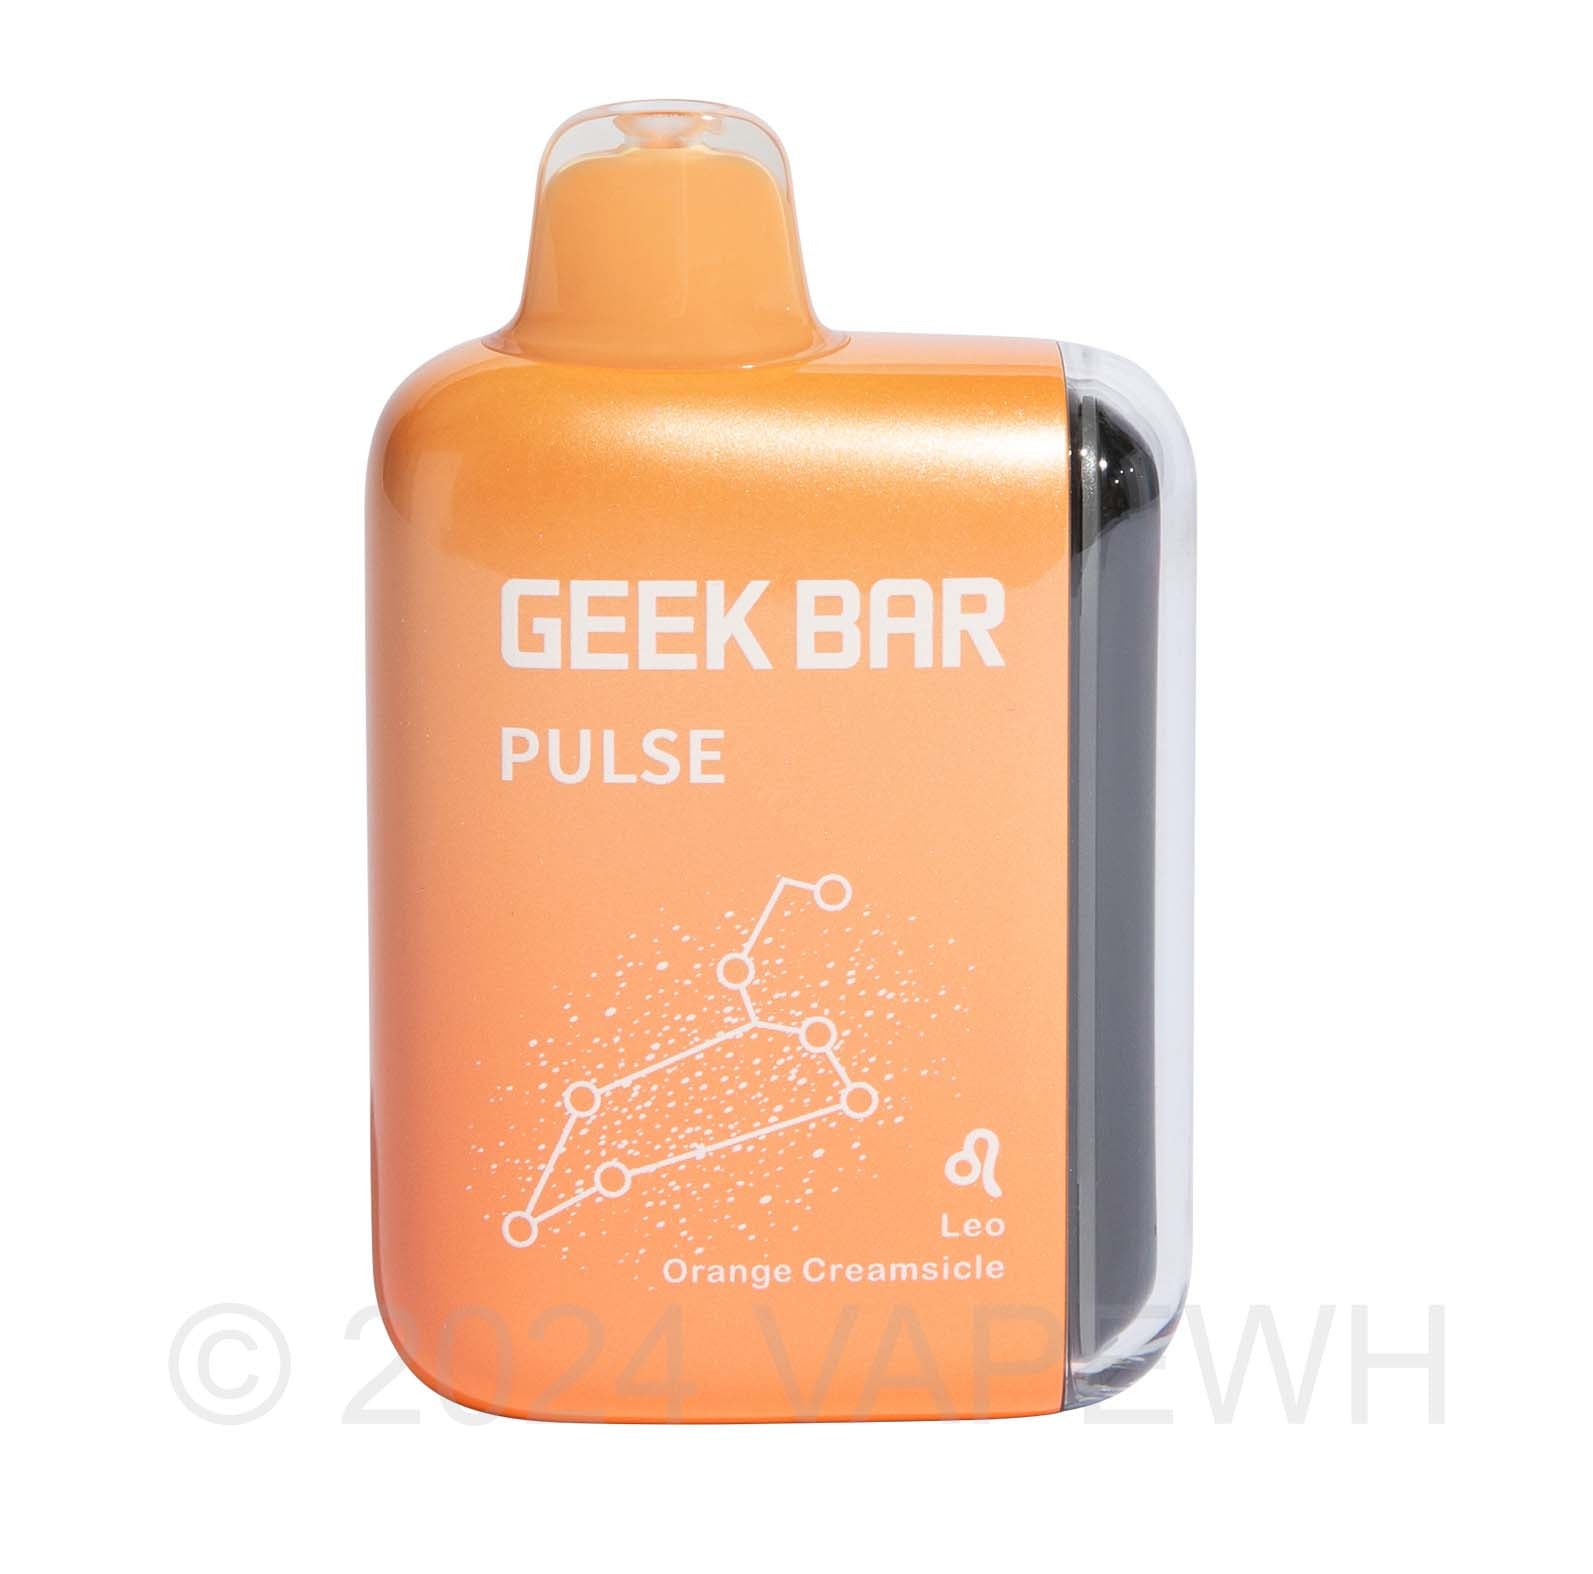 Geek Bar Pulse - Leo Orange Creamscicle